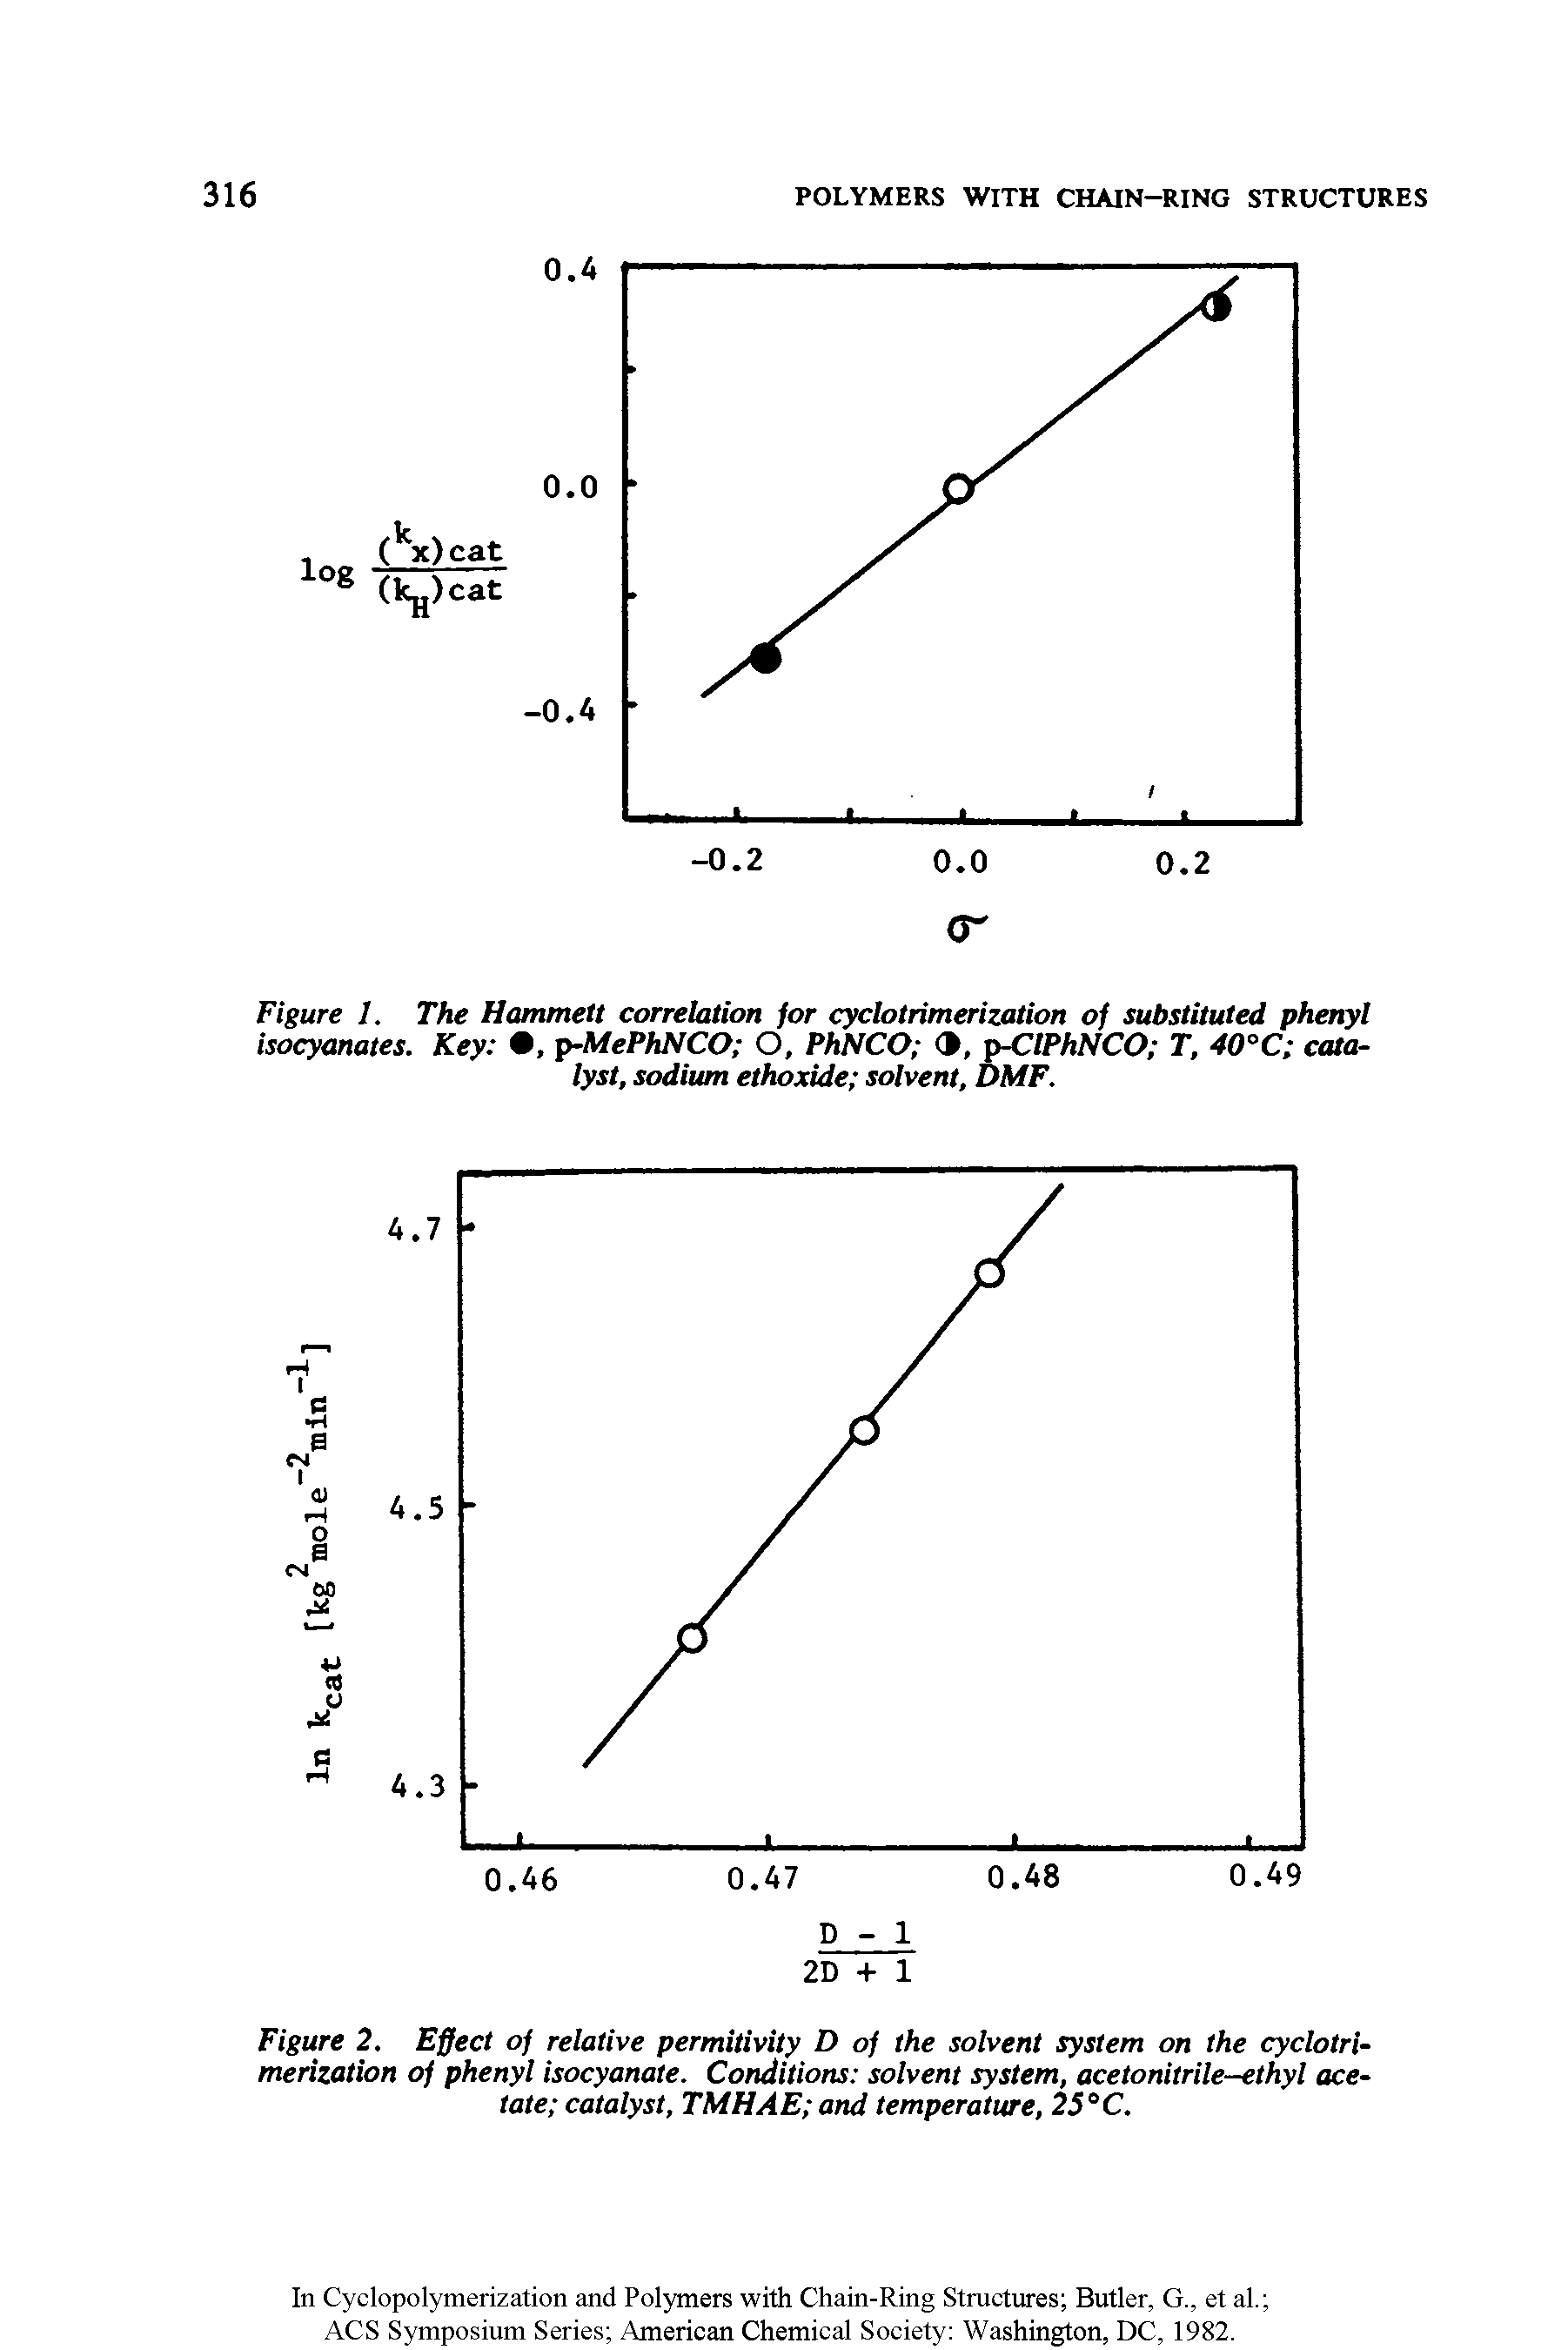 Figure 1. The Hammett correlation for cyclotrimerization of substituted phenyl isocyanates. Key , p-MePhNCO O, PhNCO , p-CIPhNCO T, 40°C catalyst, sodium ethoxide solvent, DMF.